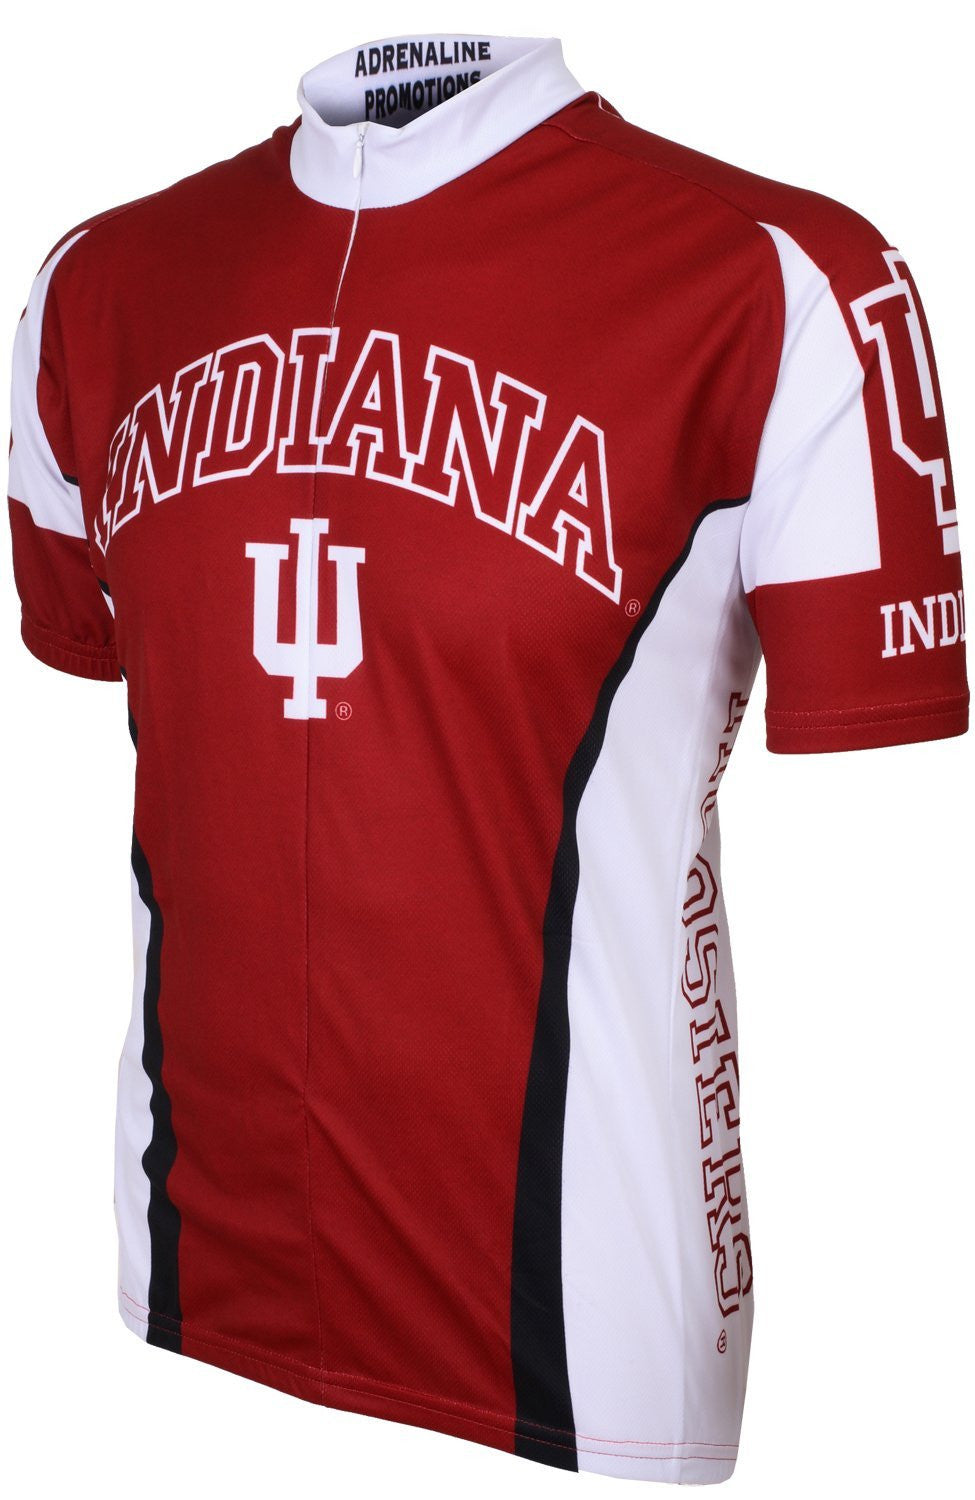 Indiana Hoosiers Road Cycling Jersey (S, M, L, XL, 2XL, 3XL)